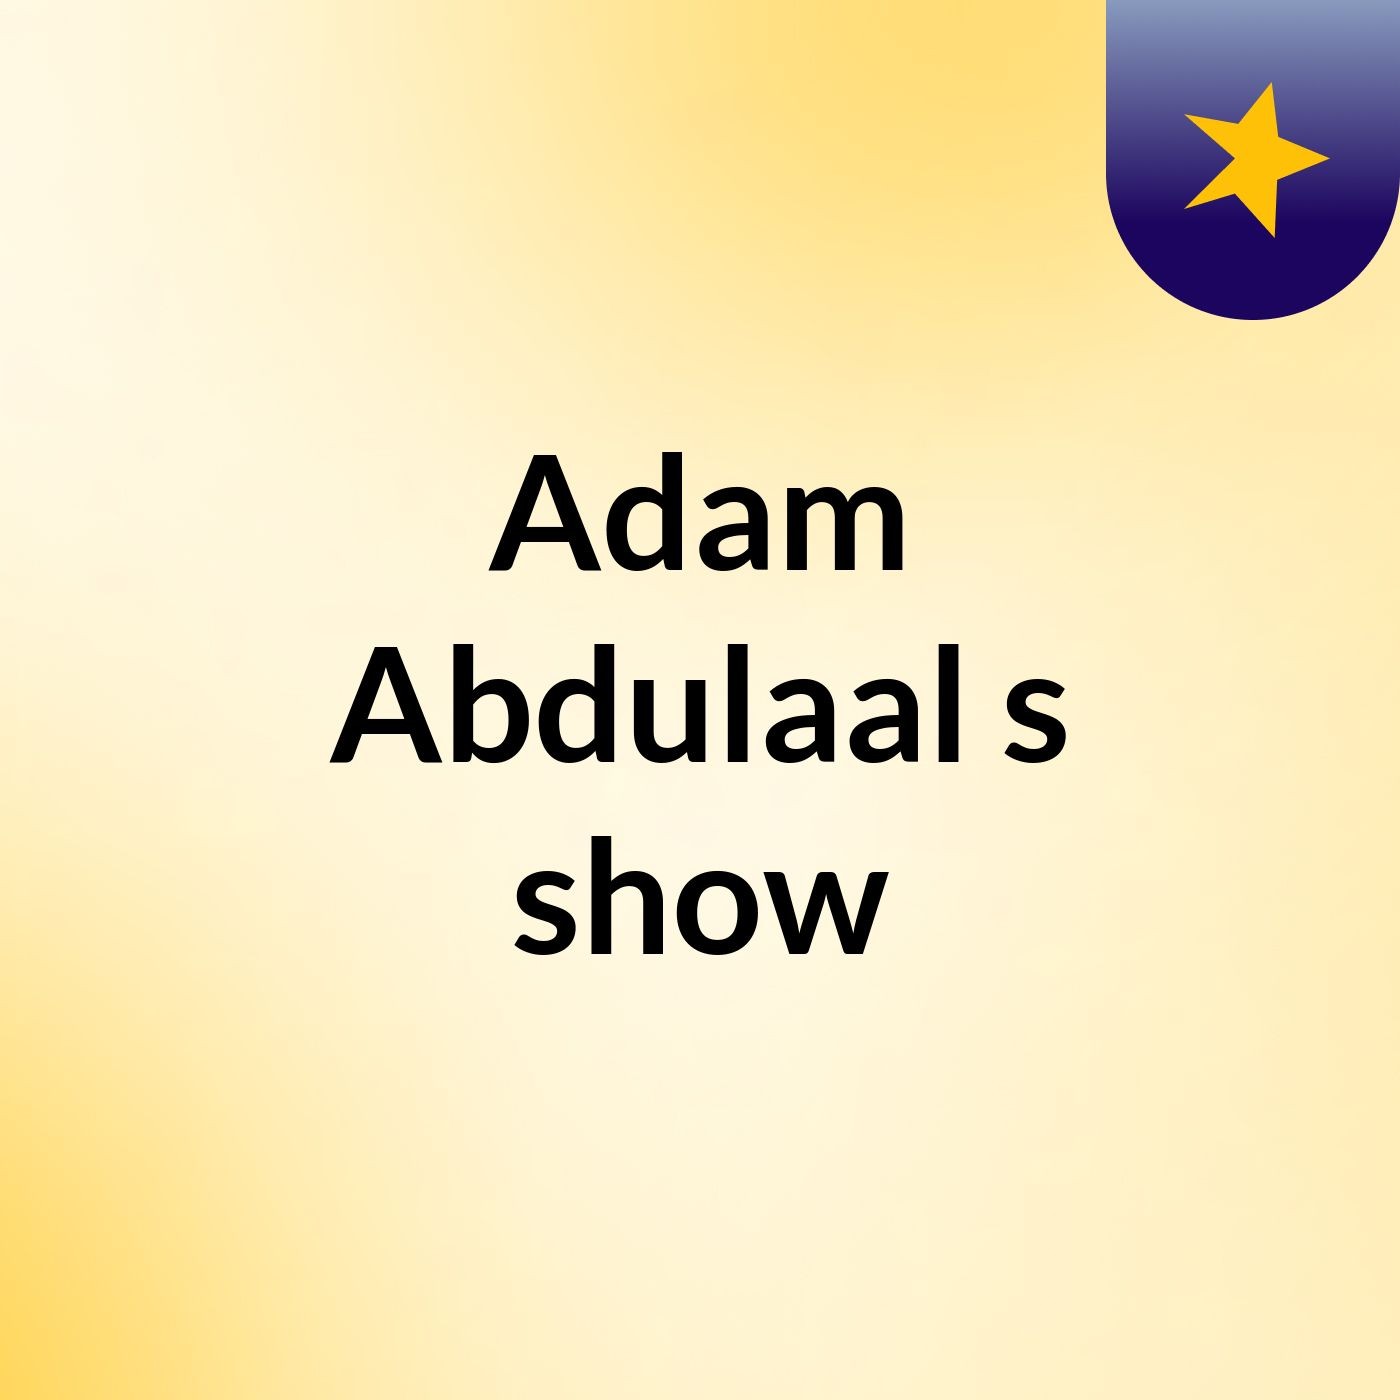 Adam Abdulaal's show